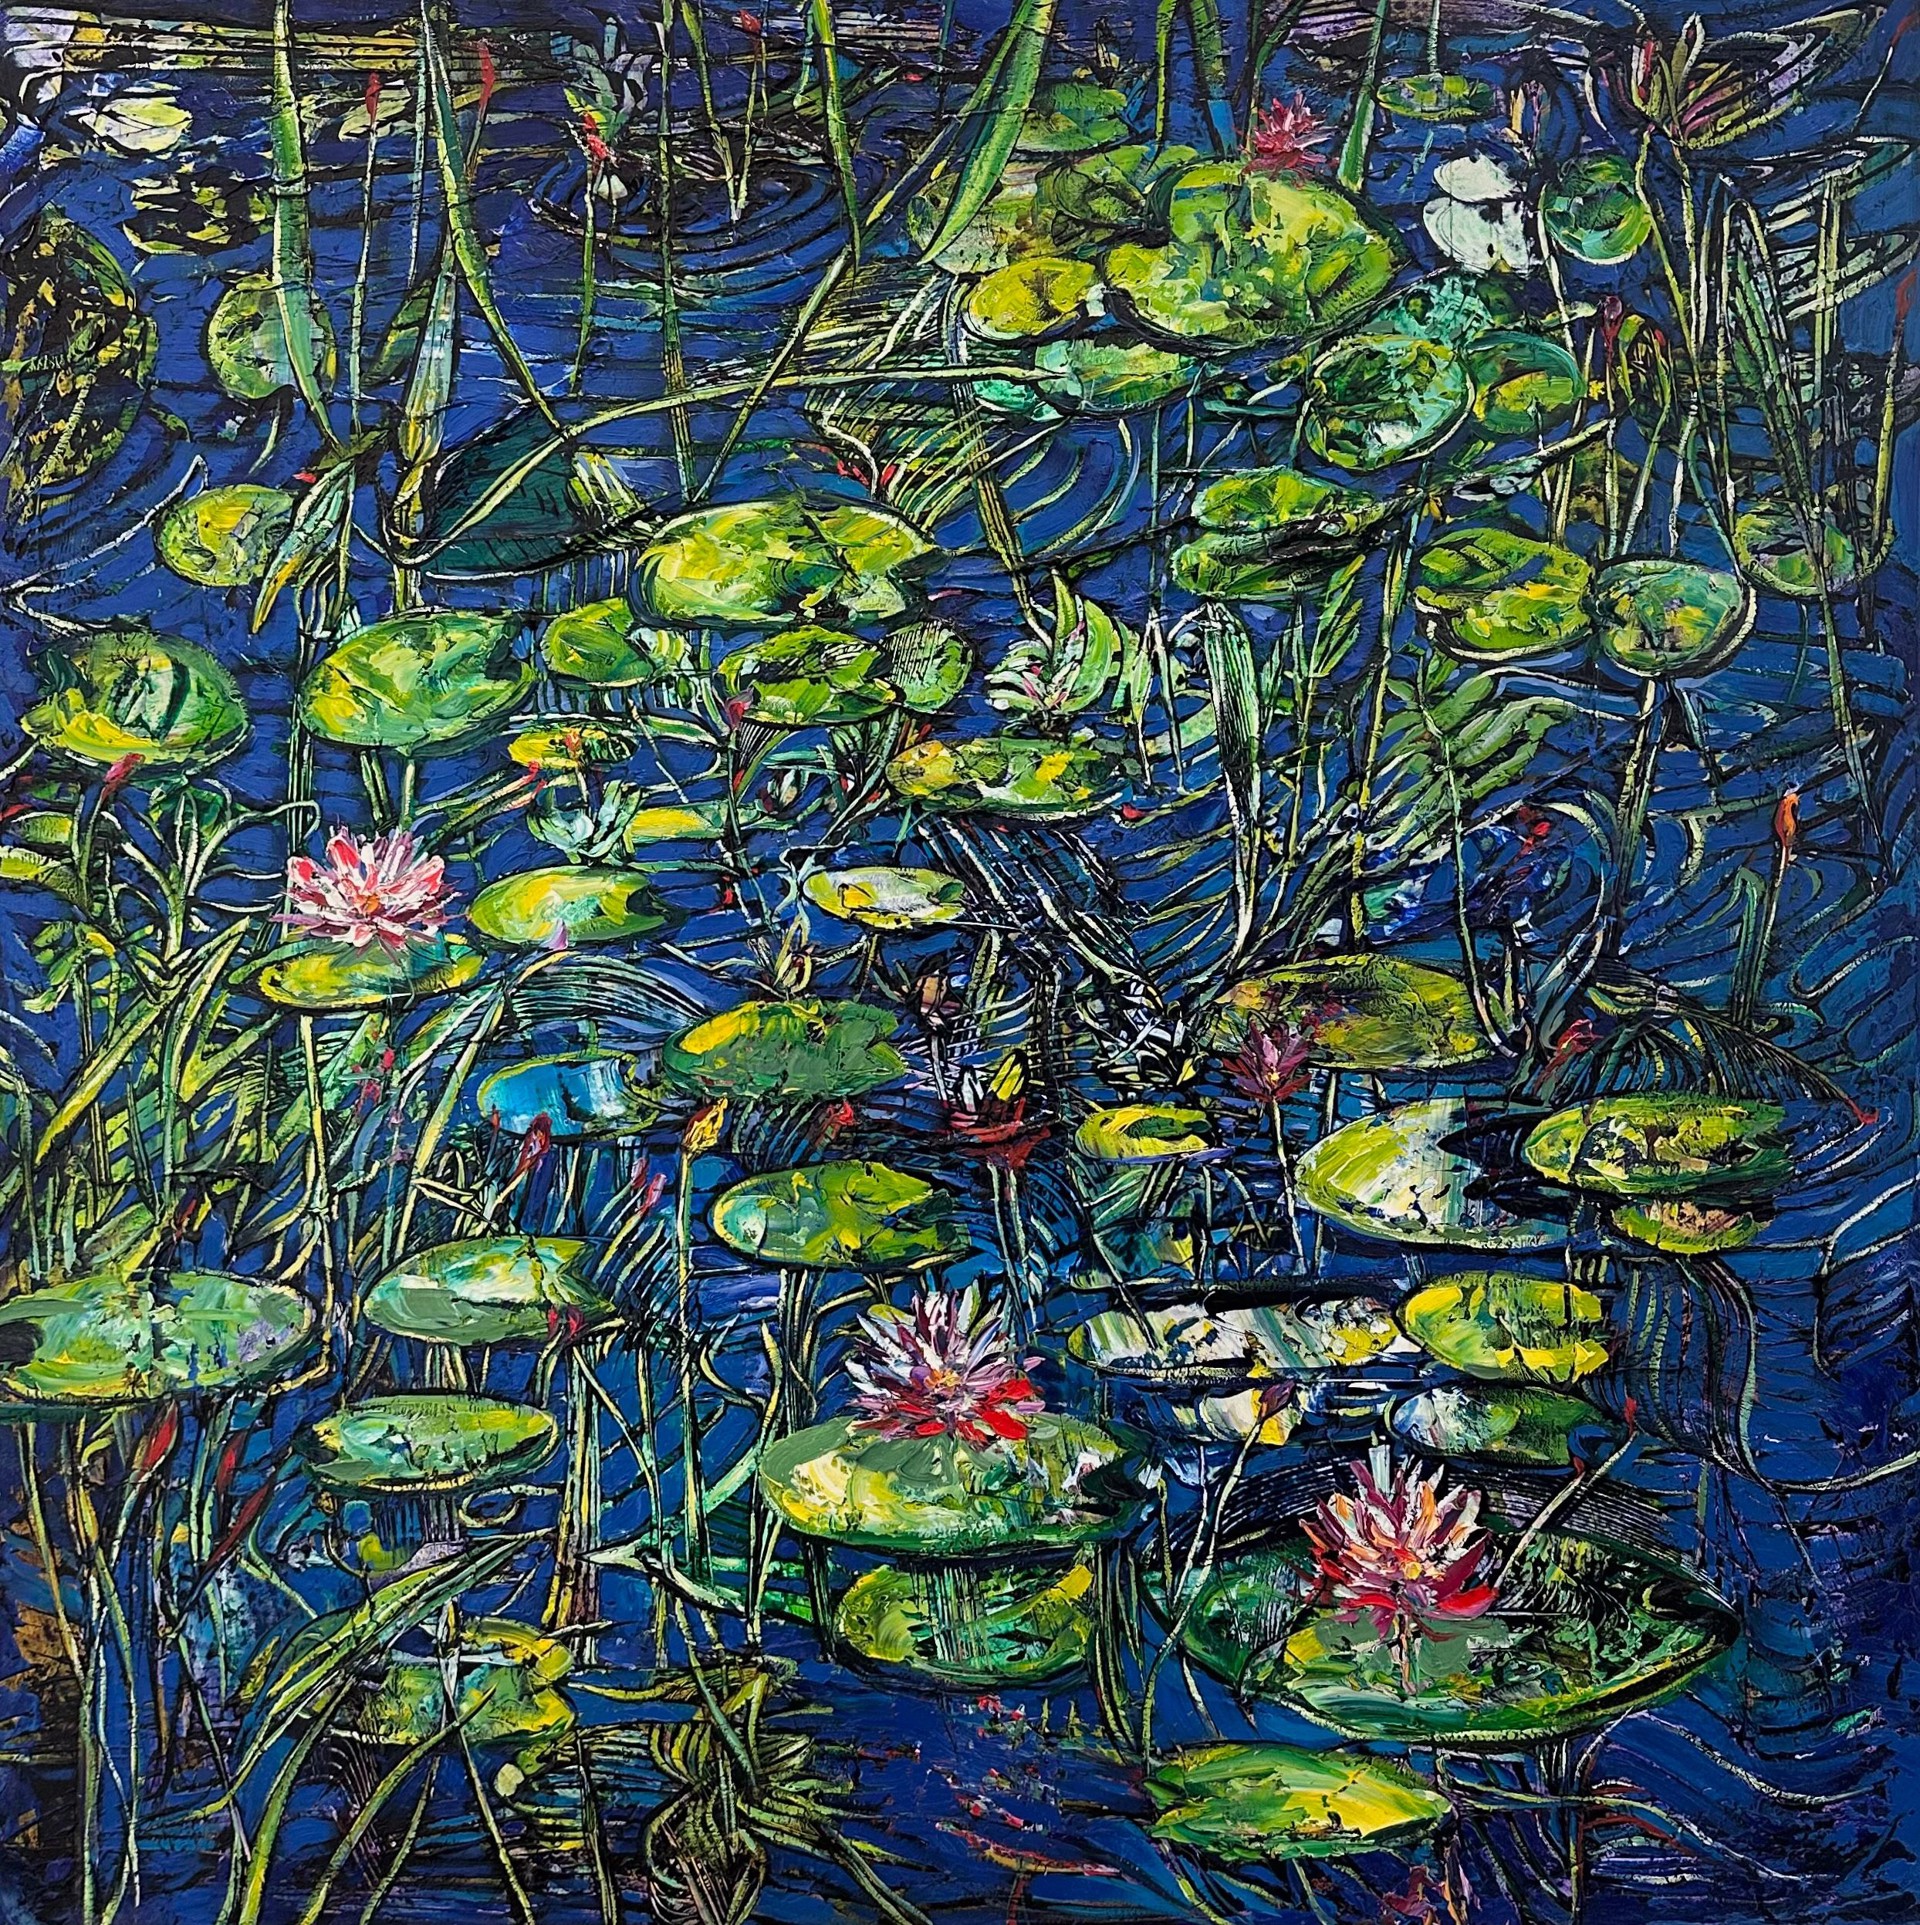 The Whisper of the Pond by Fredy Villamil